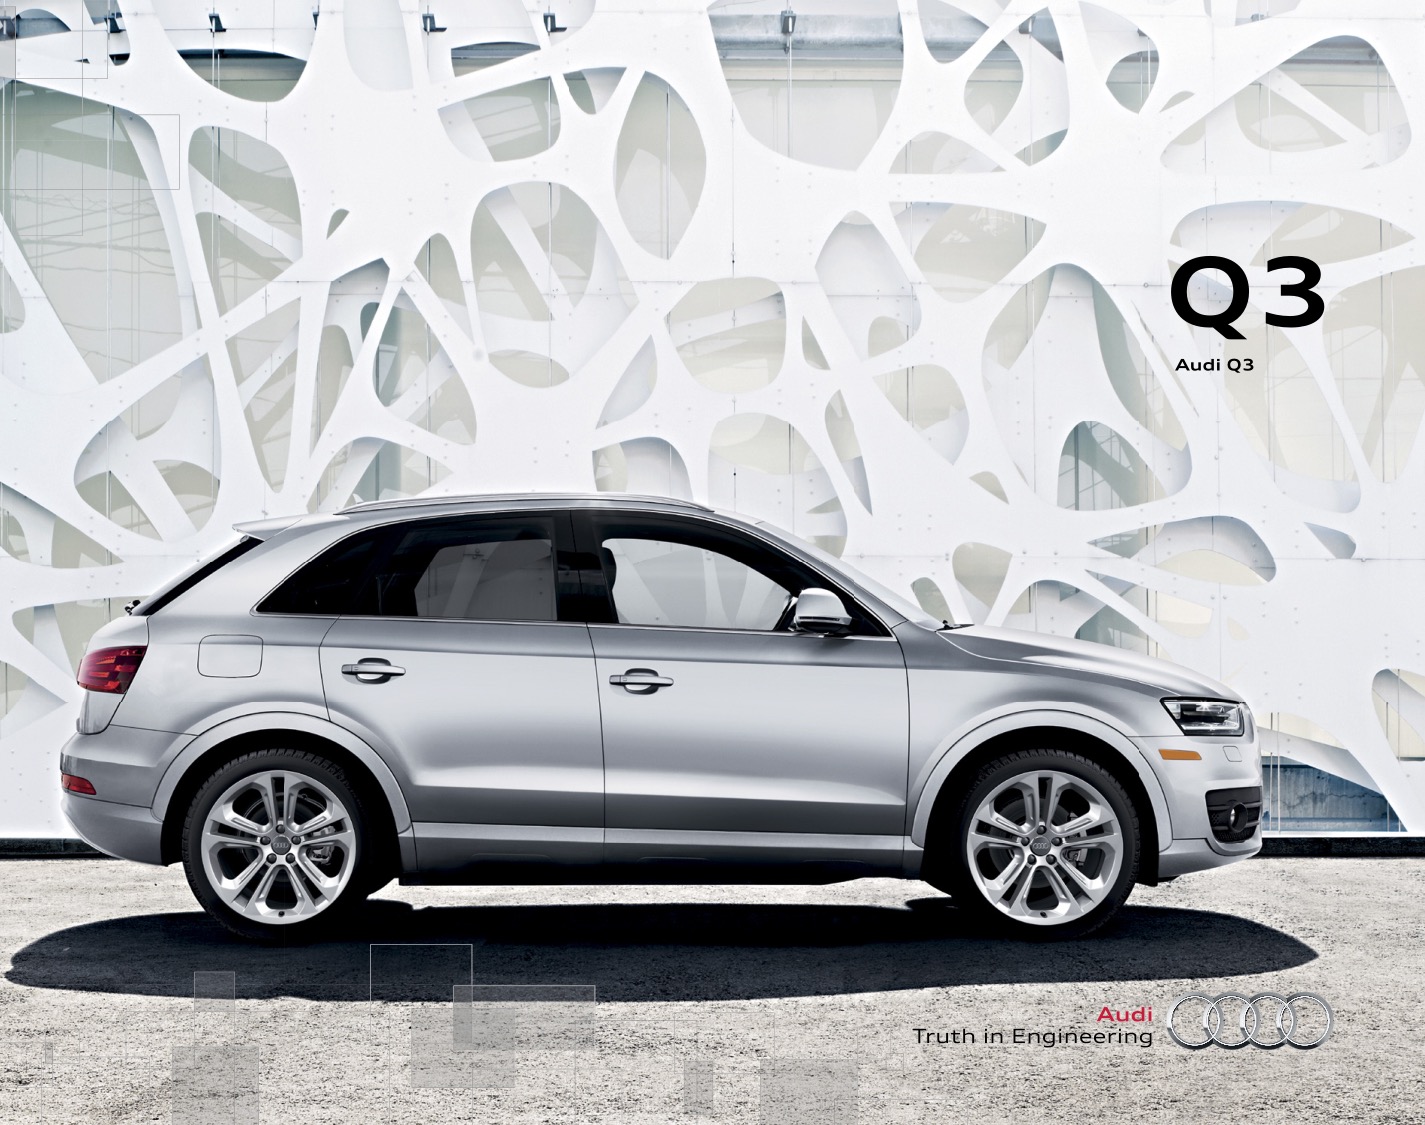 2015 Audi Q3 Brochure